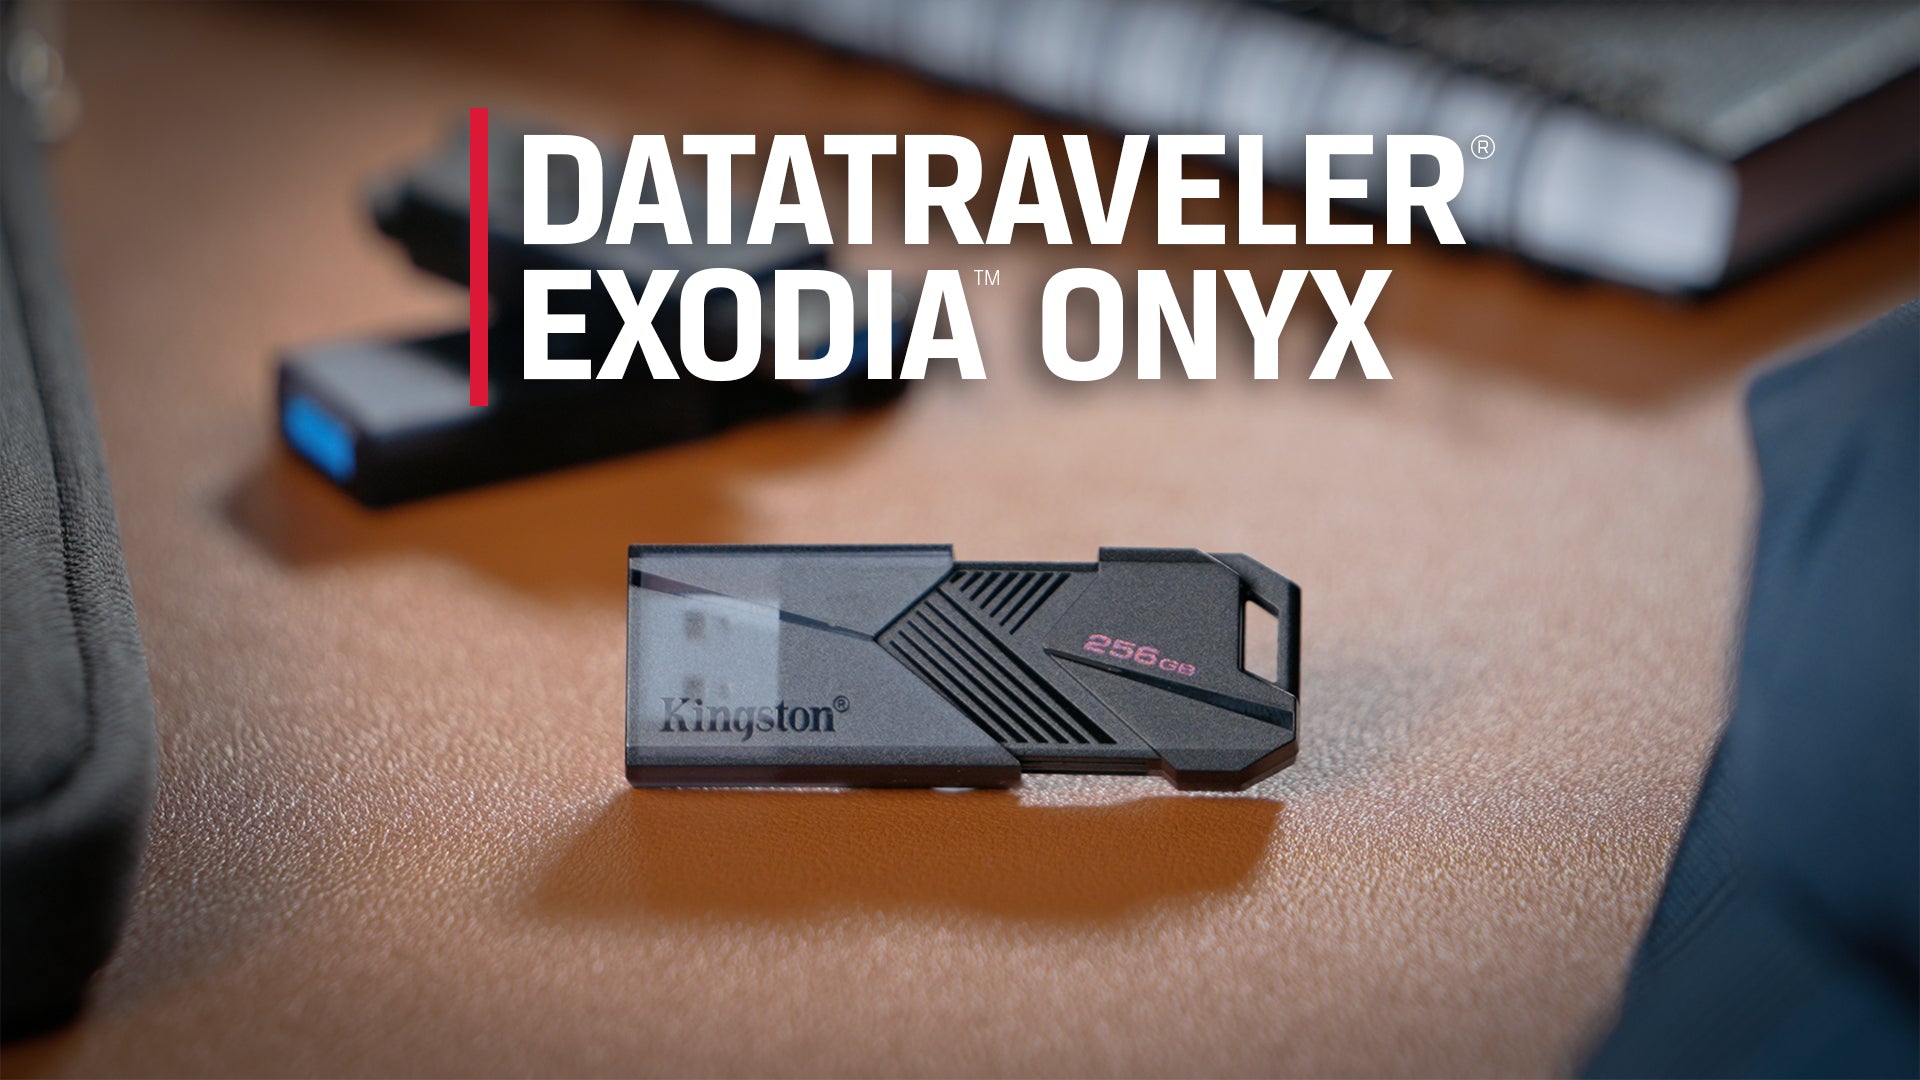 DataTraveler Exodia Onyx USB Flash Drive